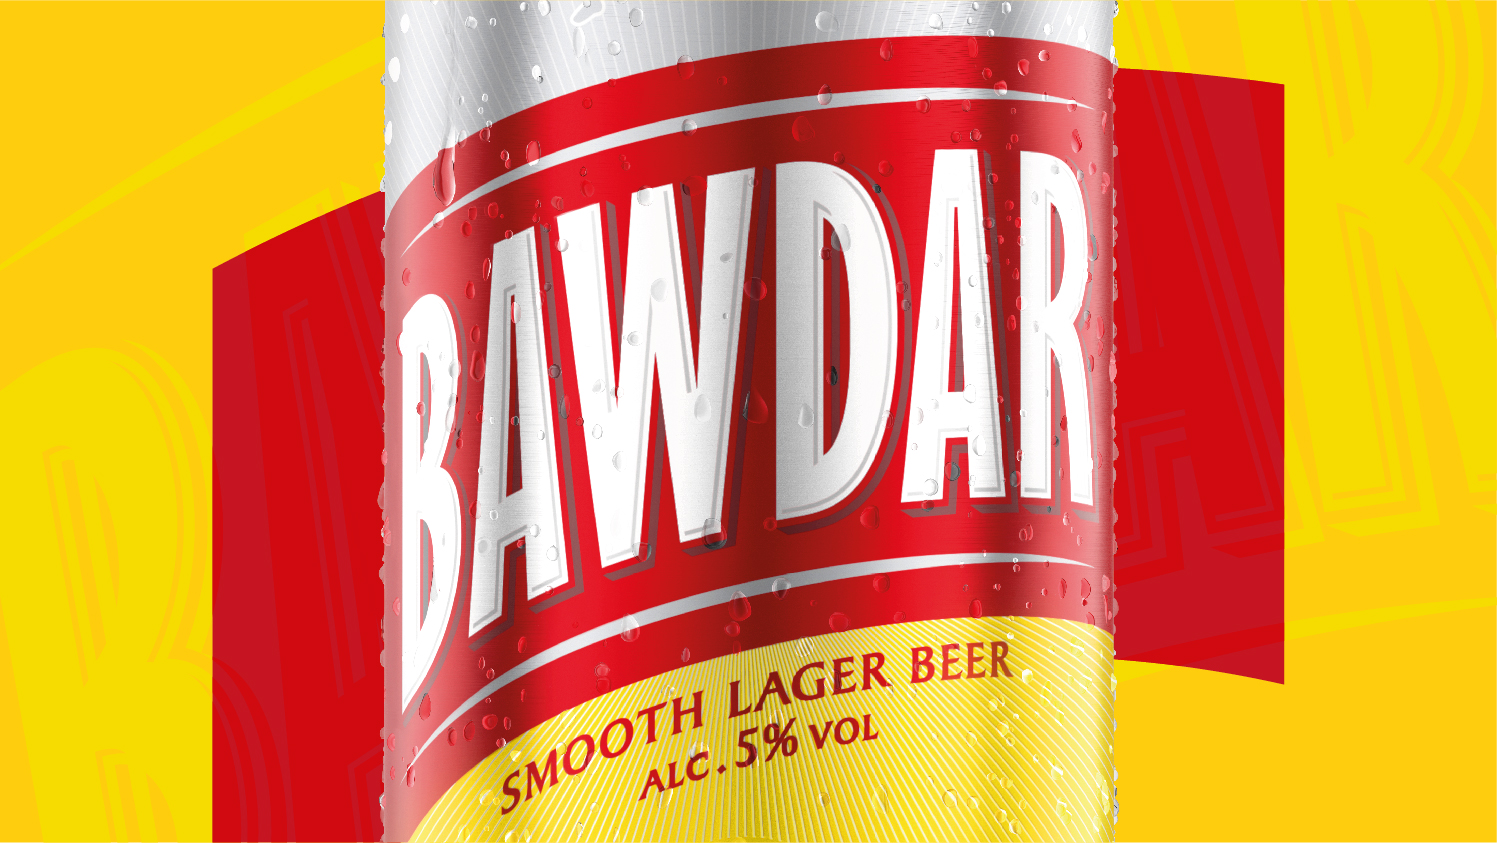 Why? Brand Design Agency Help Heineken Group Relaunch of Bawdar Larger Beer for Myanmar Market